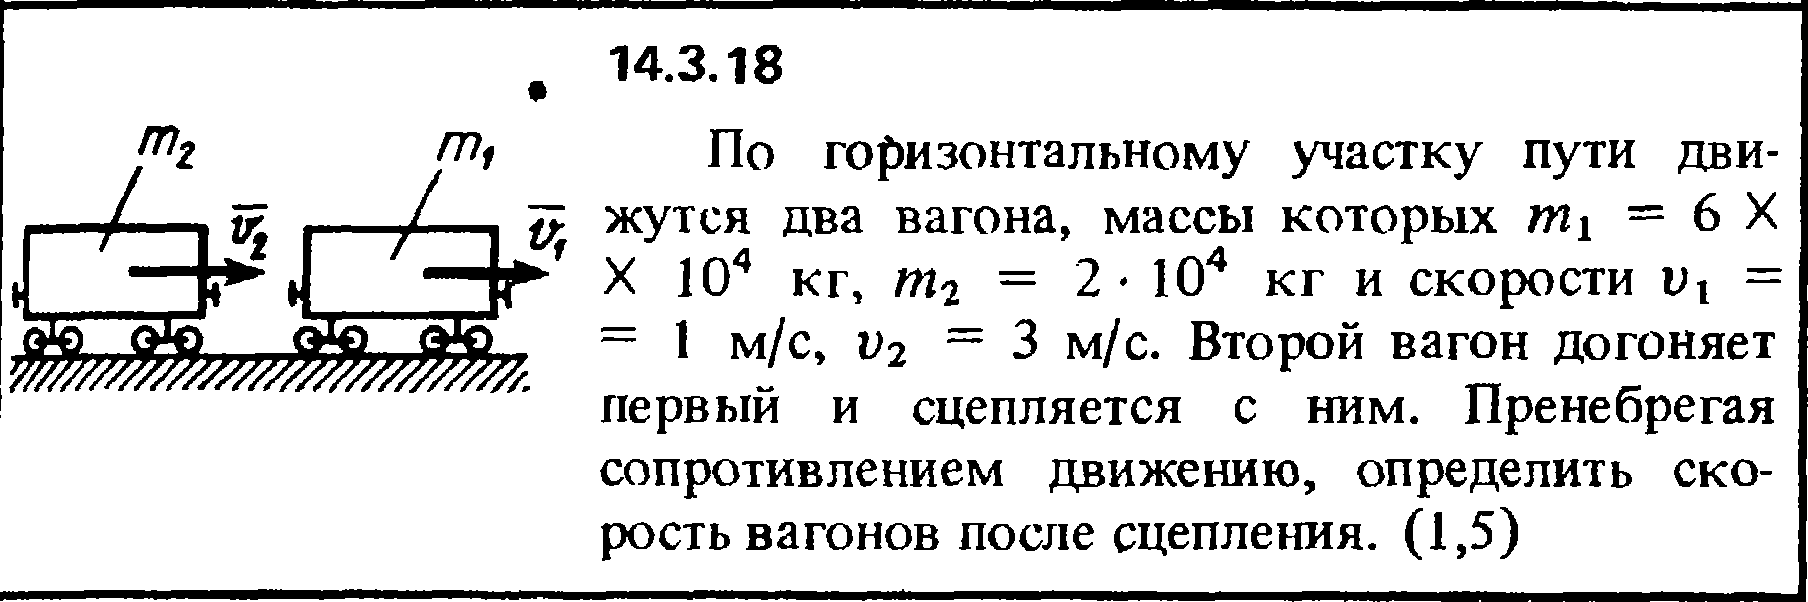 Решение задачи 14.3.18 из сборника Кепе О.Е. 1989 года